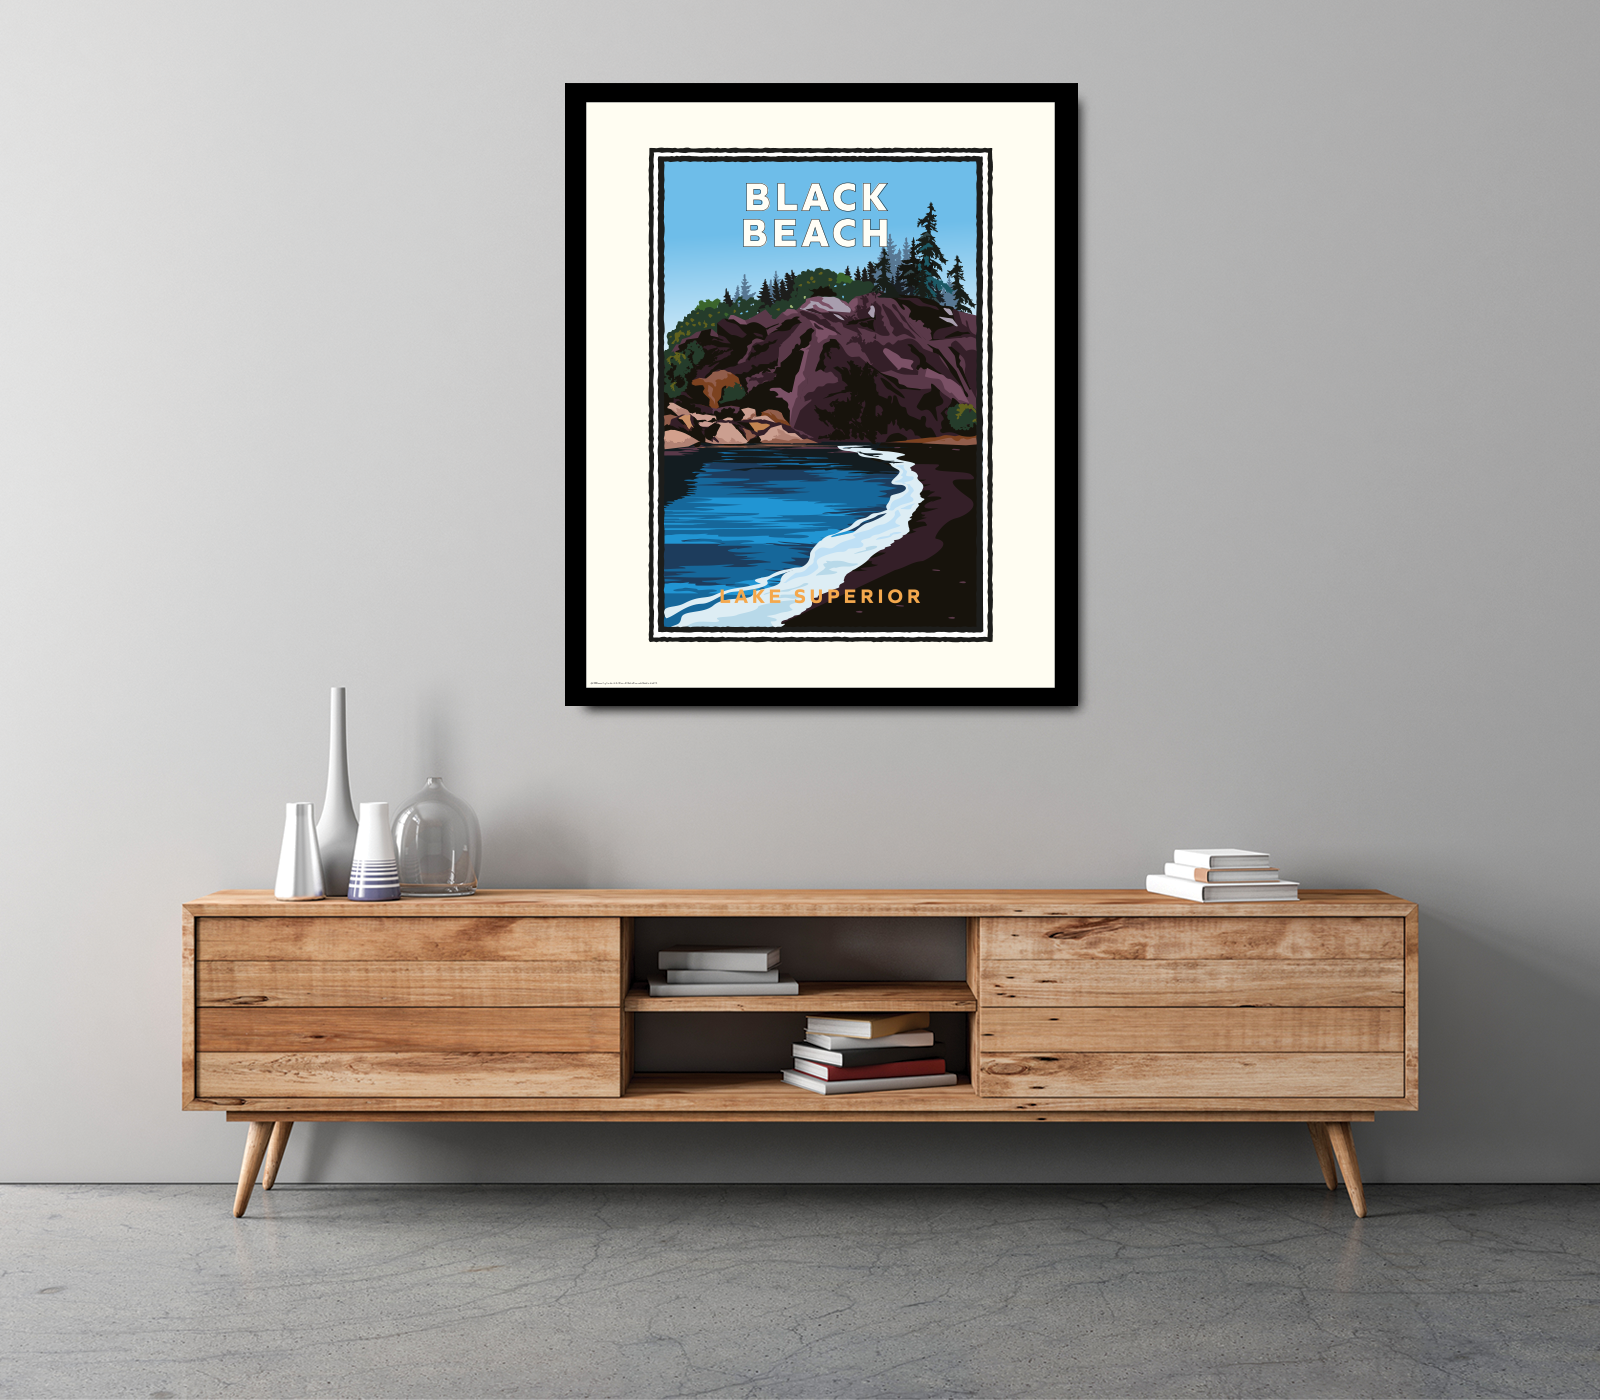 Landmark MN | Black Beach Lake Superior Art Print